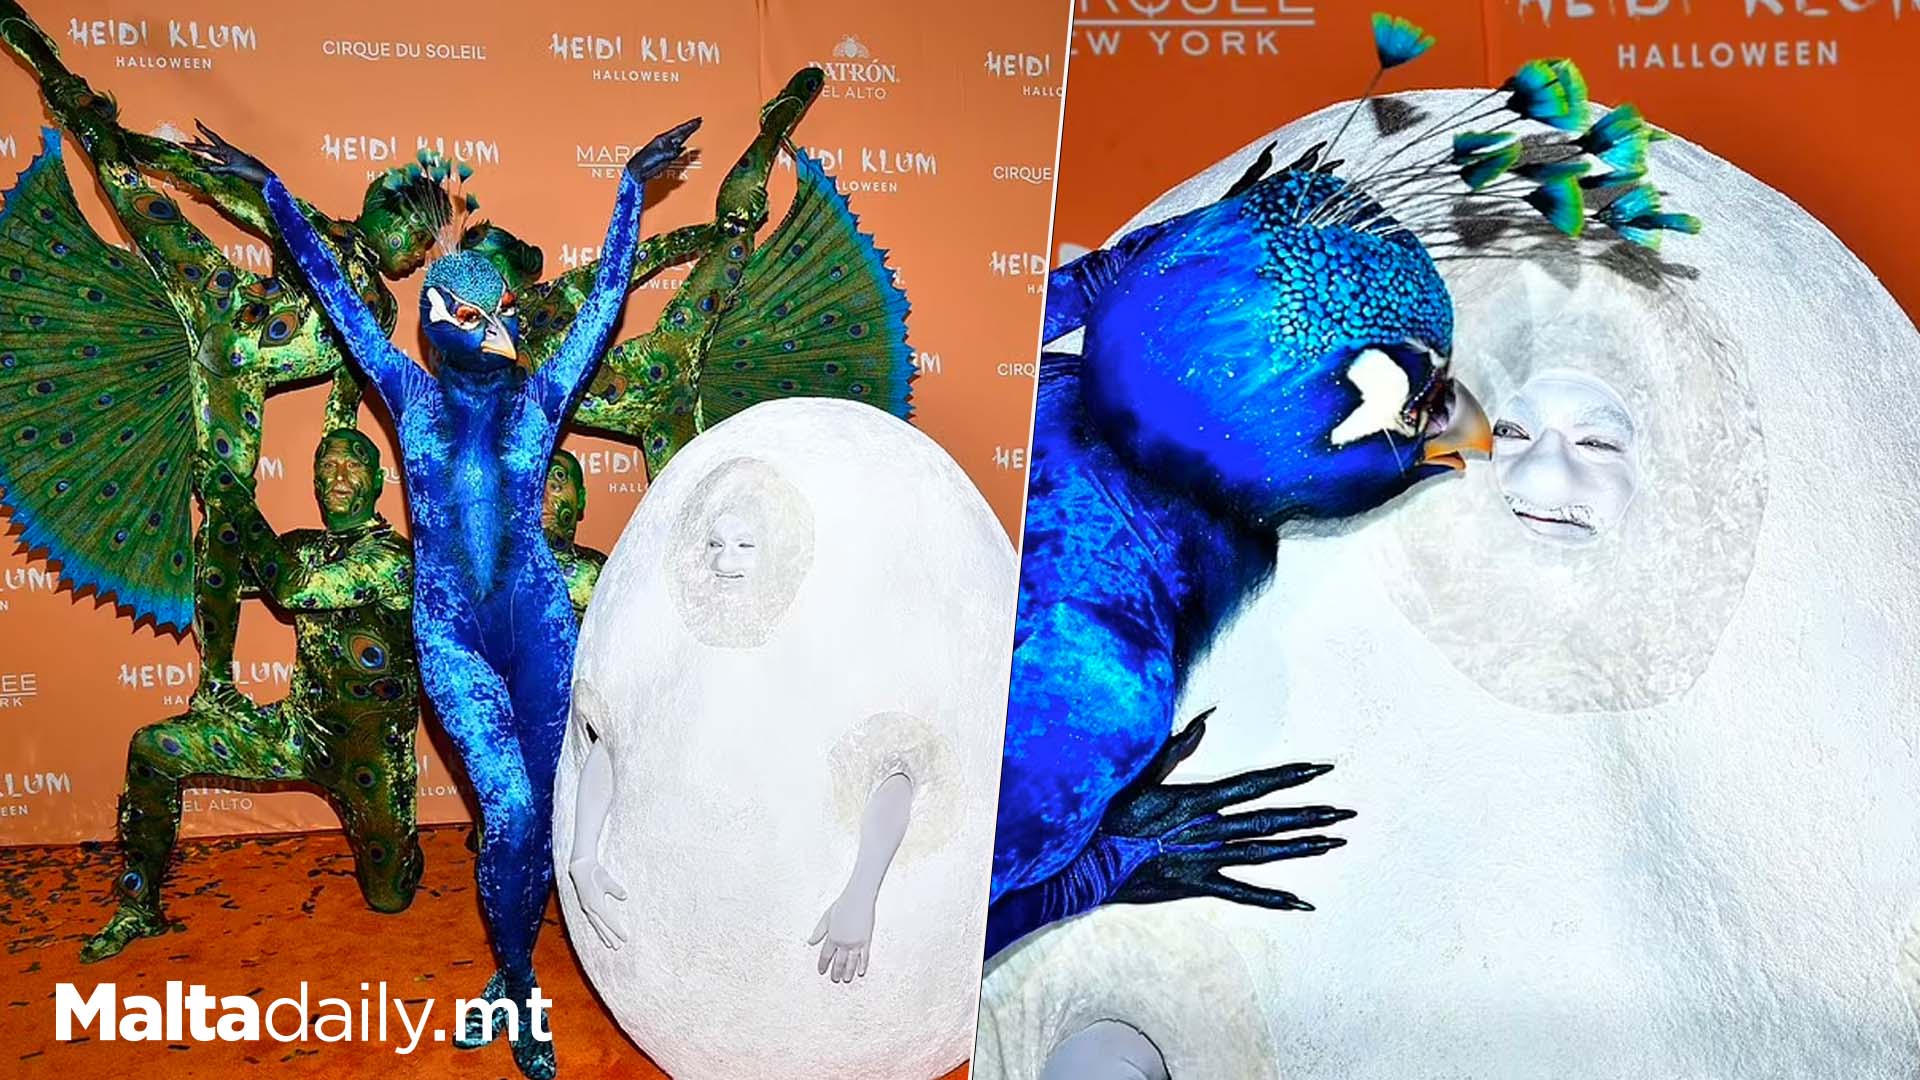 Heidi Klum's Peacock Costume Wins Halloween...Again